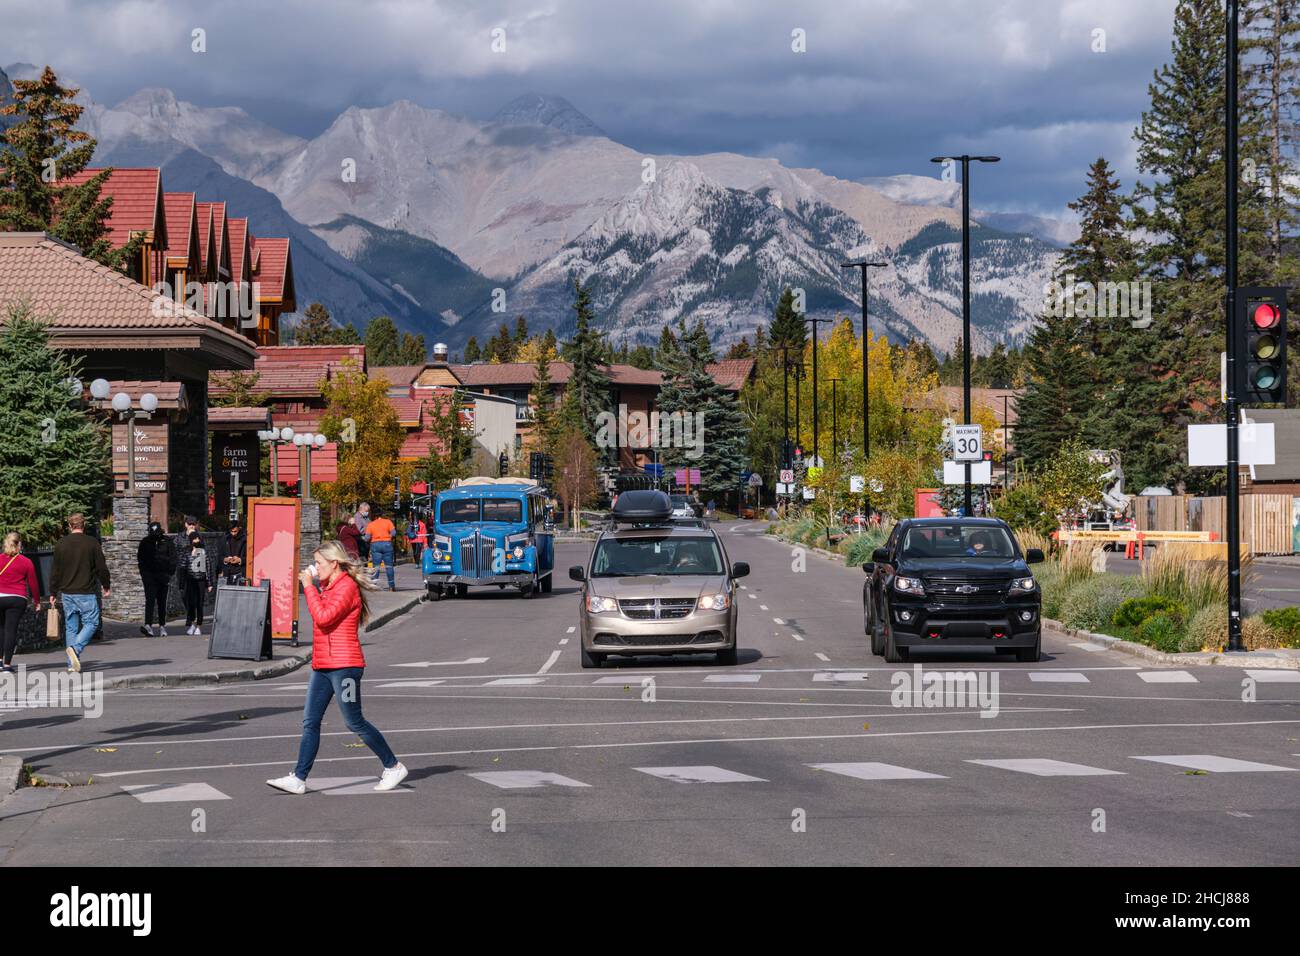 Banff, Canada - 30 September 2021: Banff Avenue during the fall season. Stock Photo